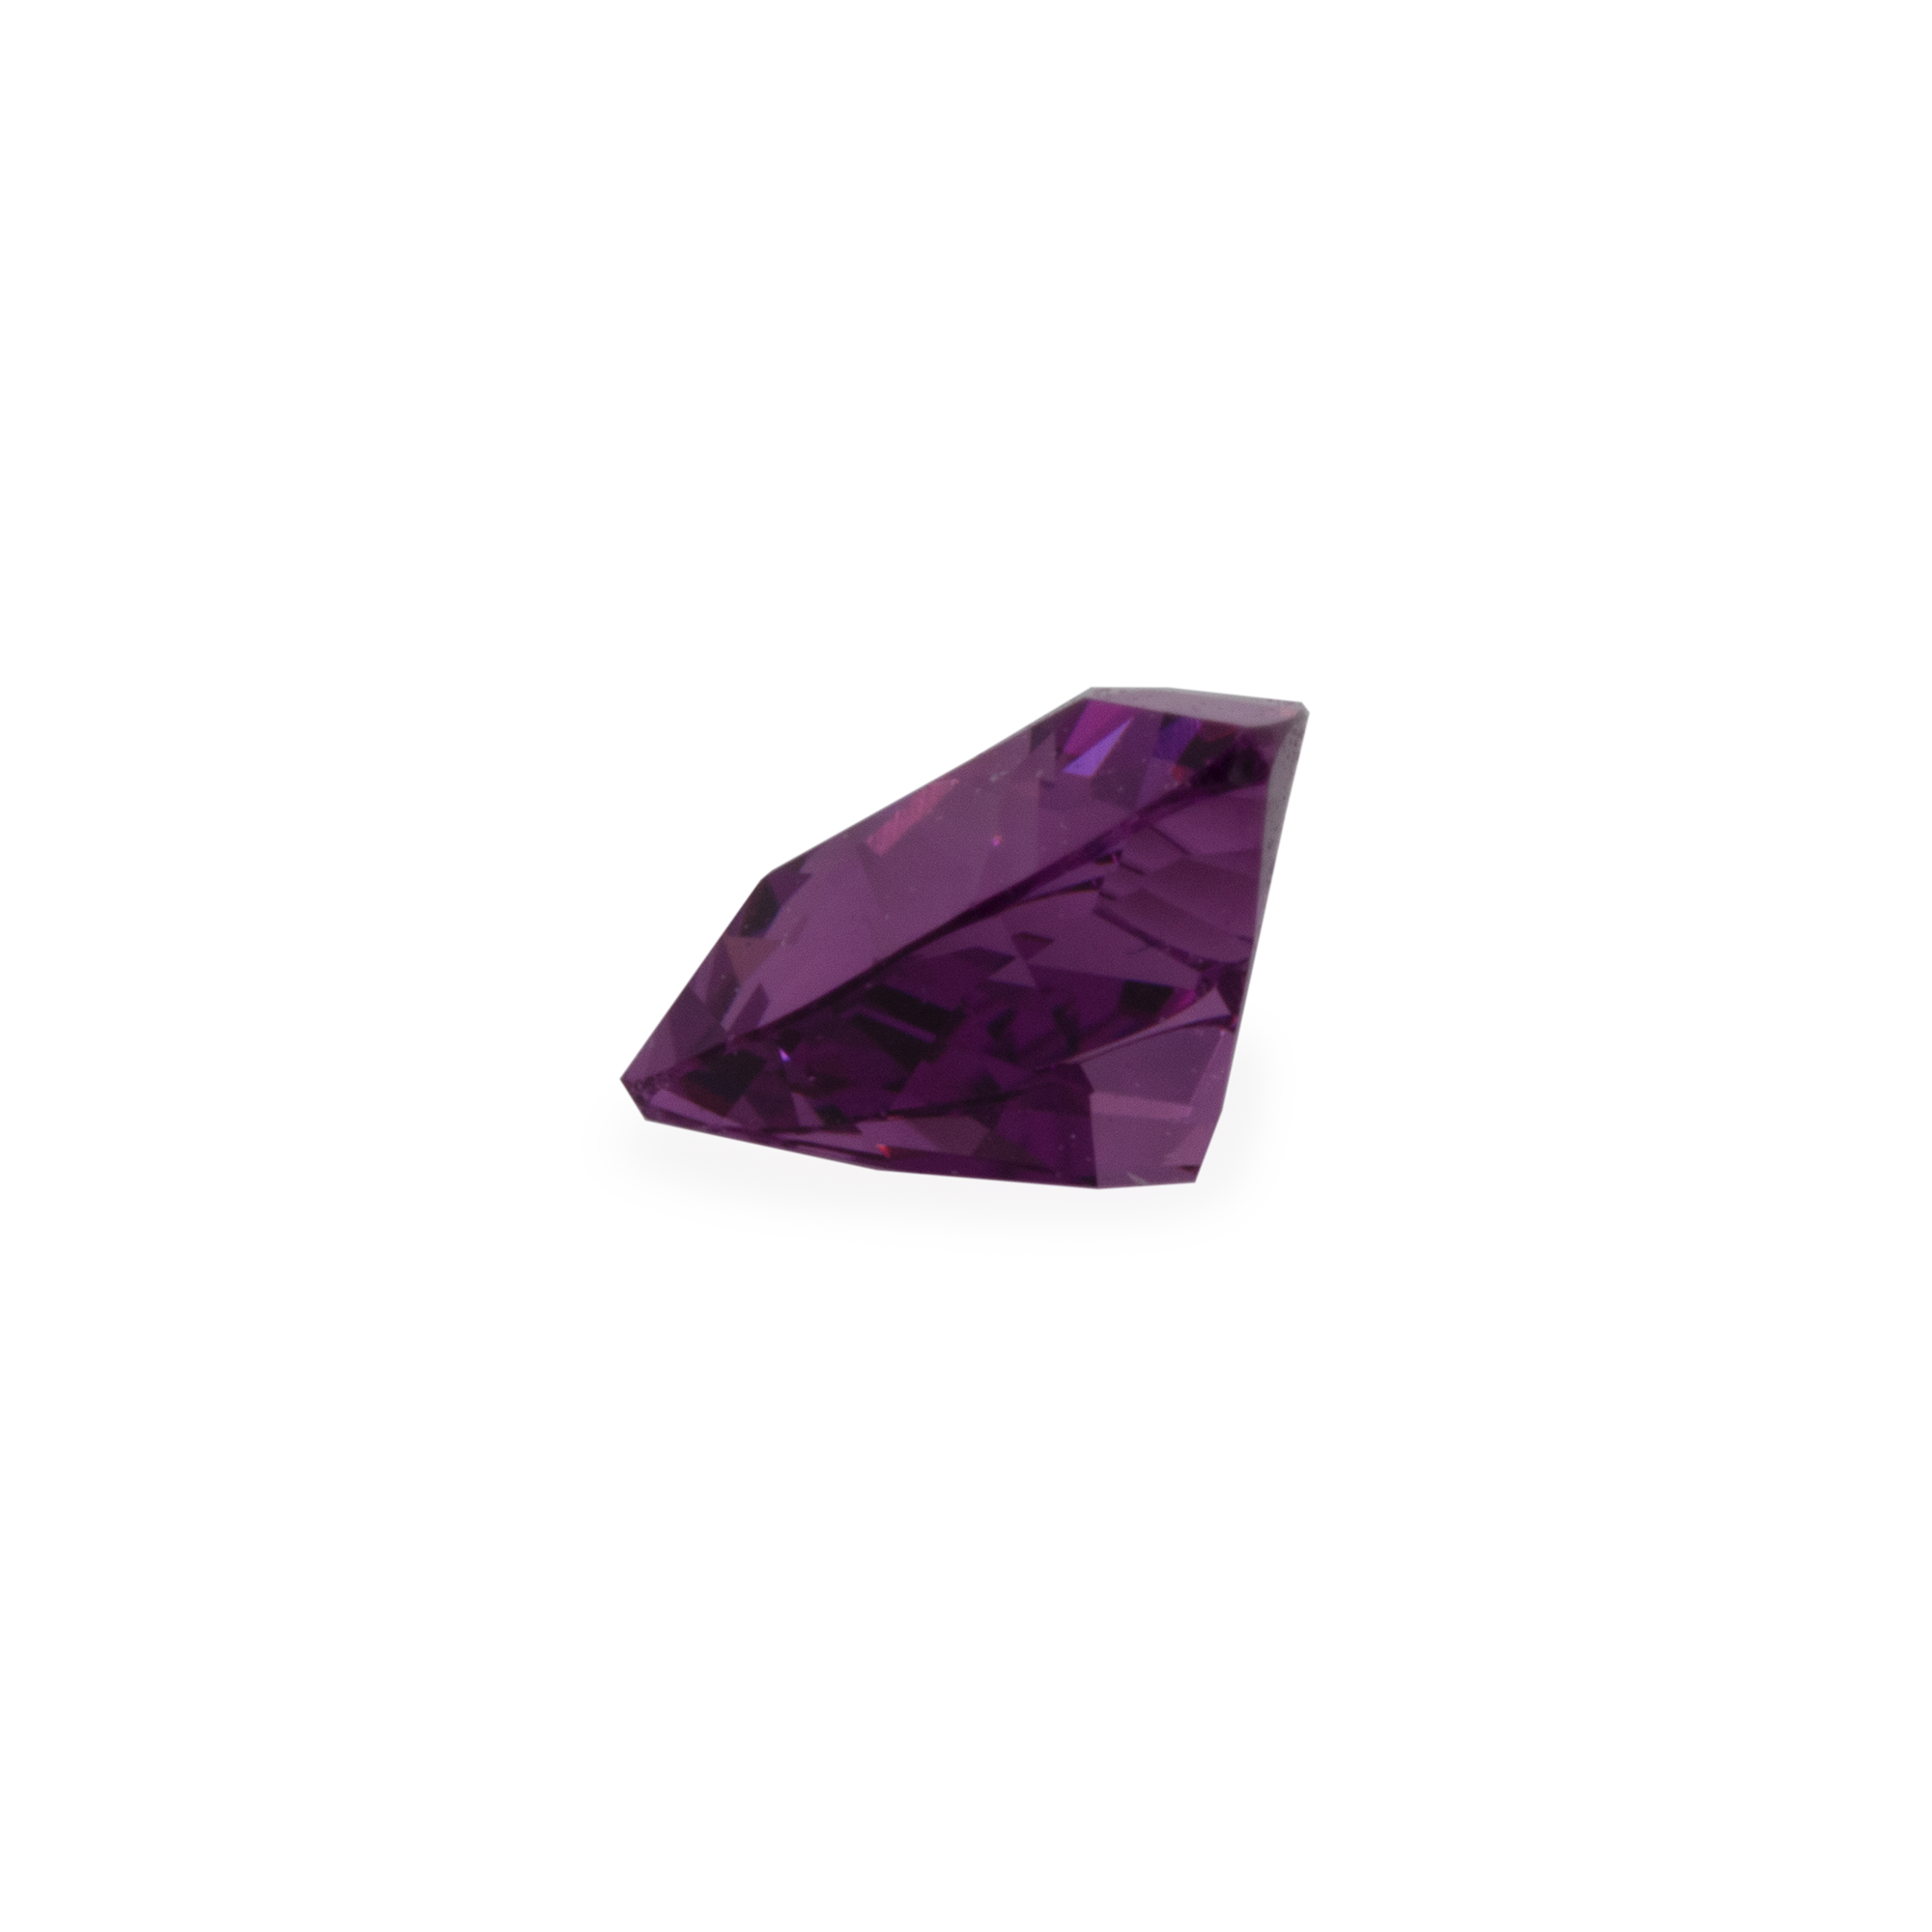 Royal Purple Garnet - purple, triangle, 4x4 mm, 0.23-0.26 cts, No. RP39001